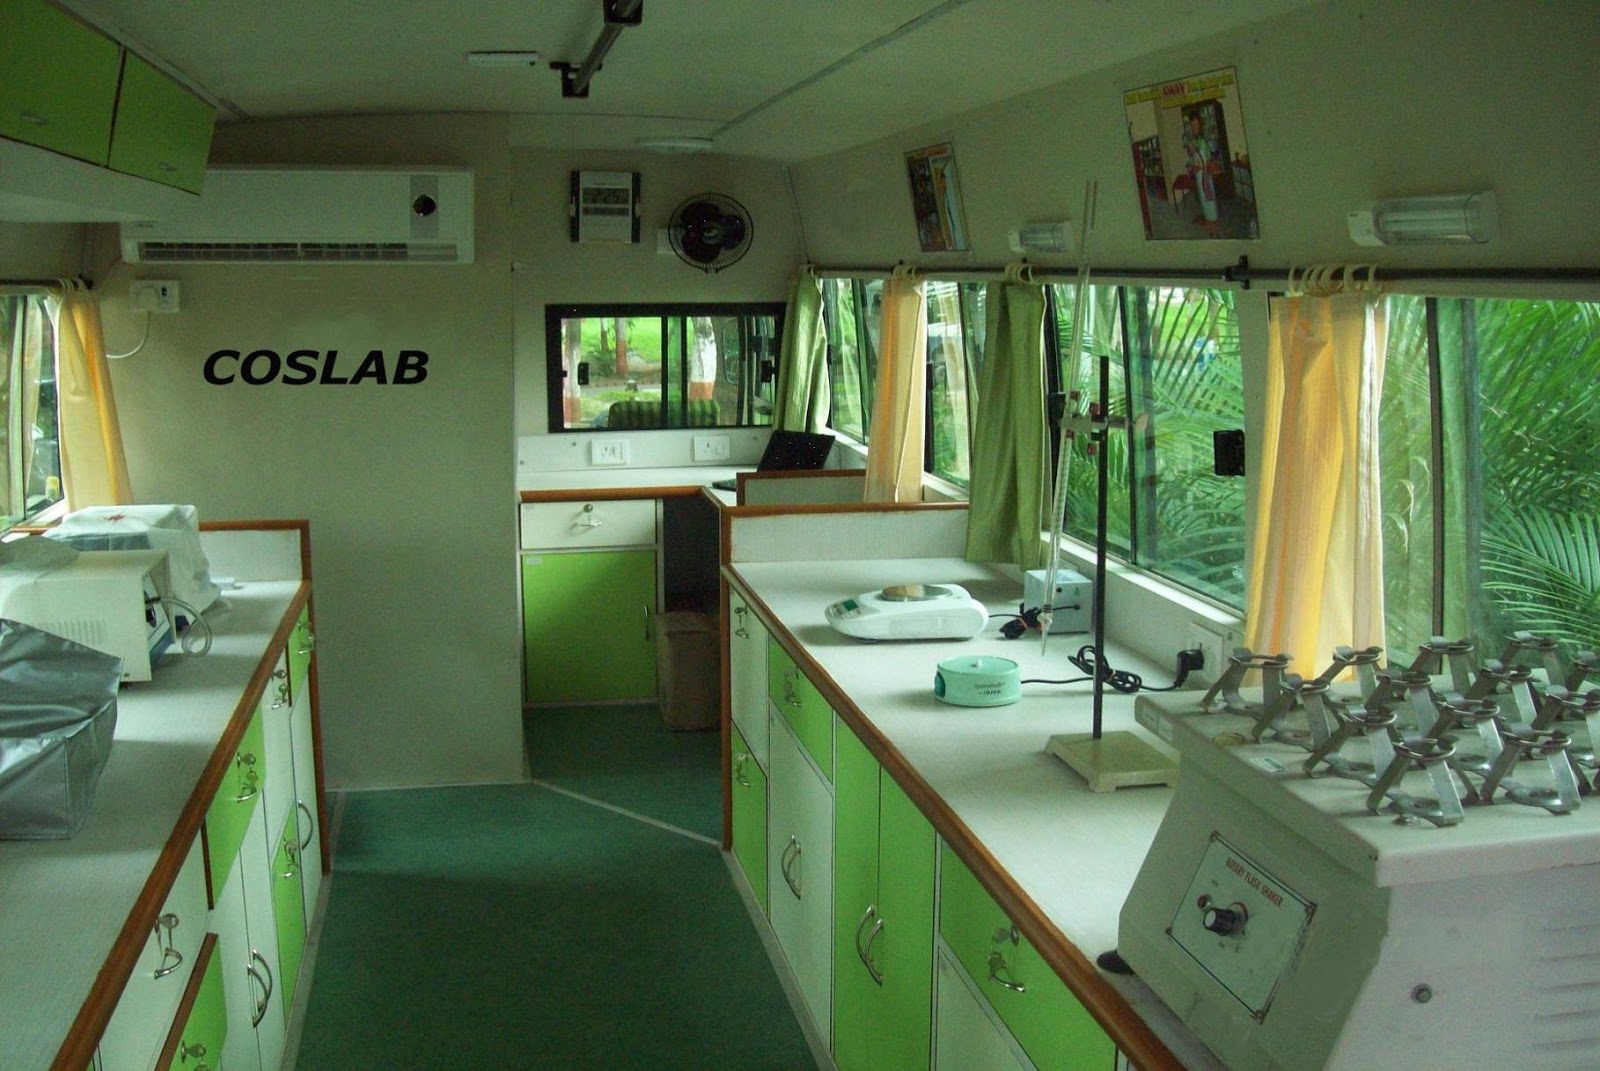 Mobile Soil Testing Laboratory Van/Bus